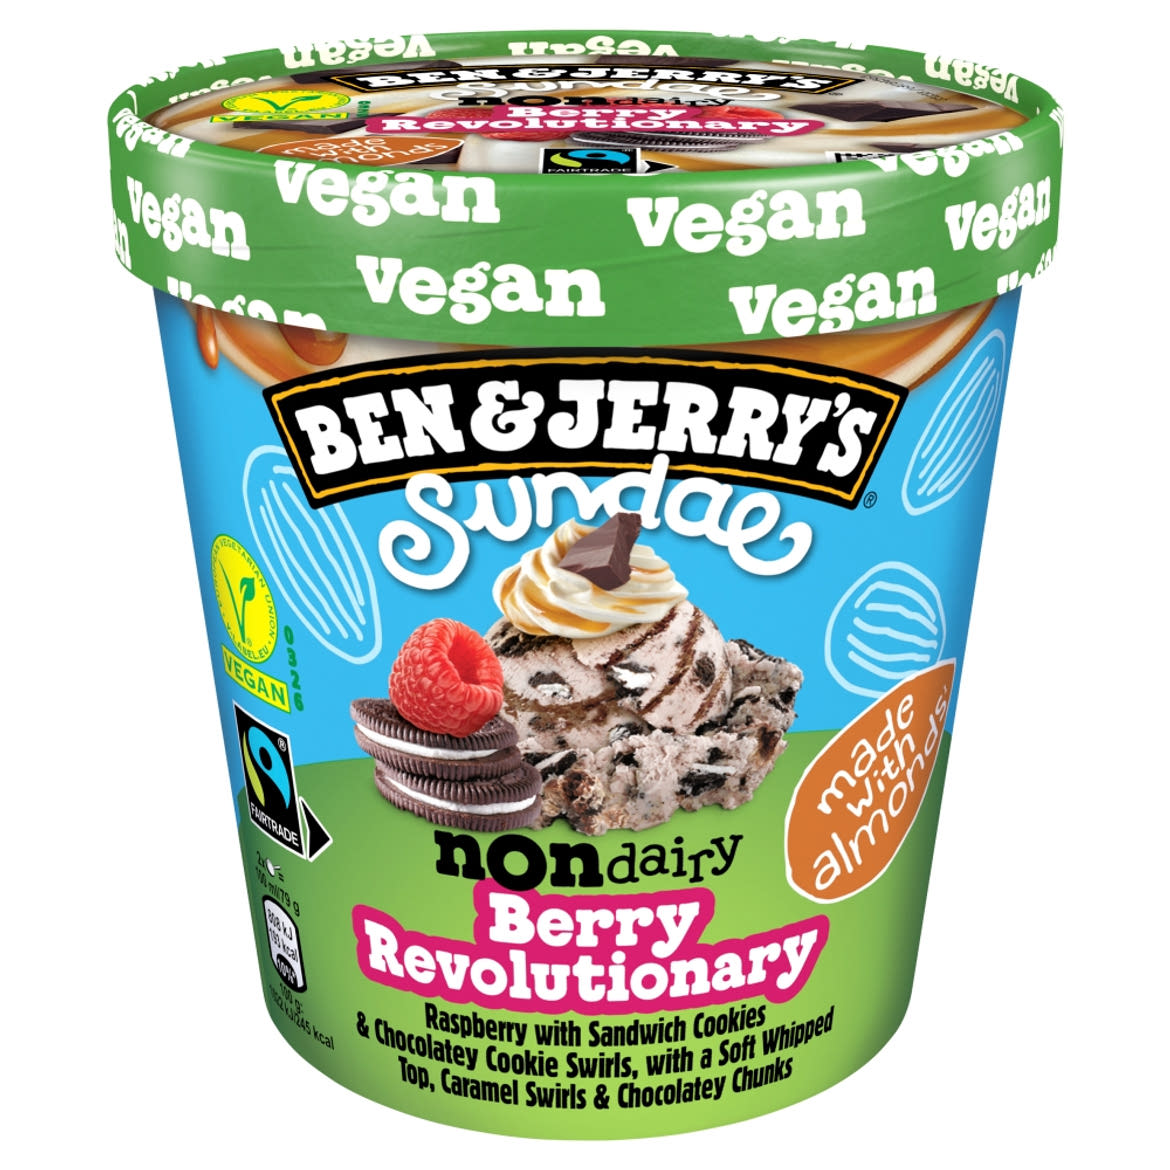 Ben & Jerry's Sundae Berry Revolutionary növényi alapú málnás jégkrém kakaós kekszdarabokkal